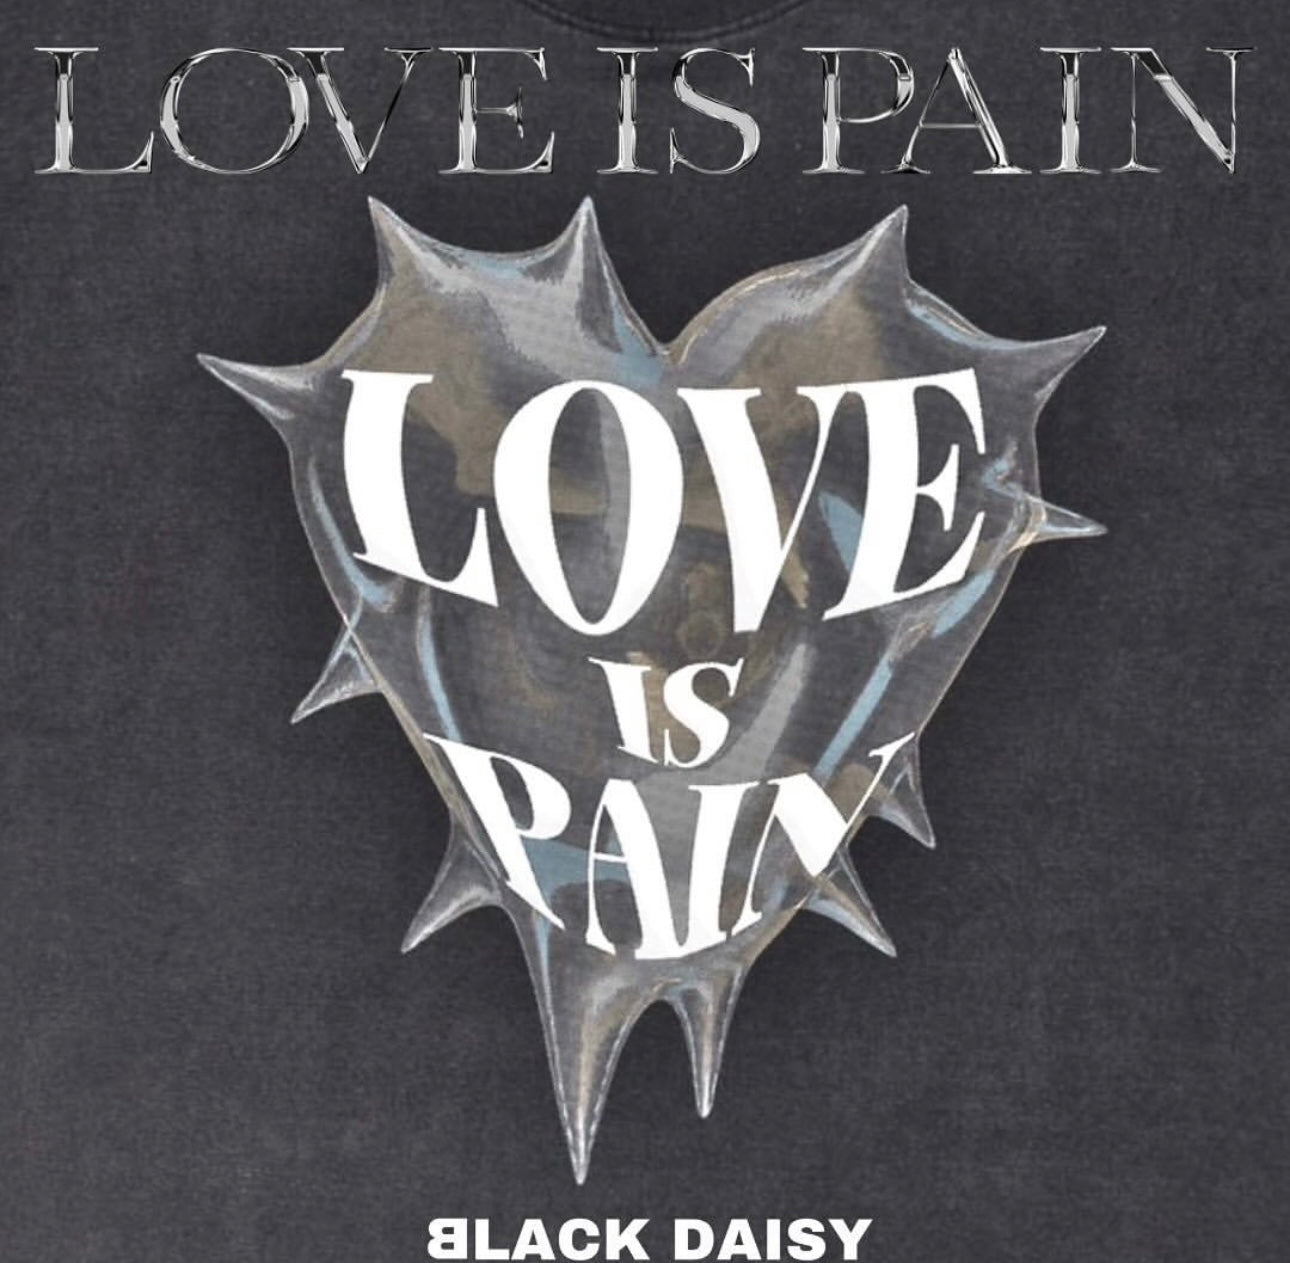 BLACKDAISY LOVE IS PAIN TSHIRT